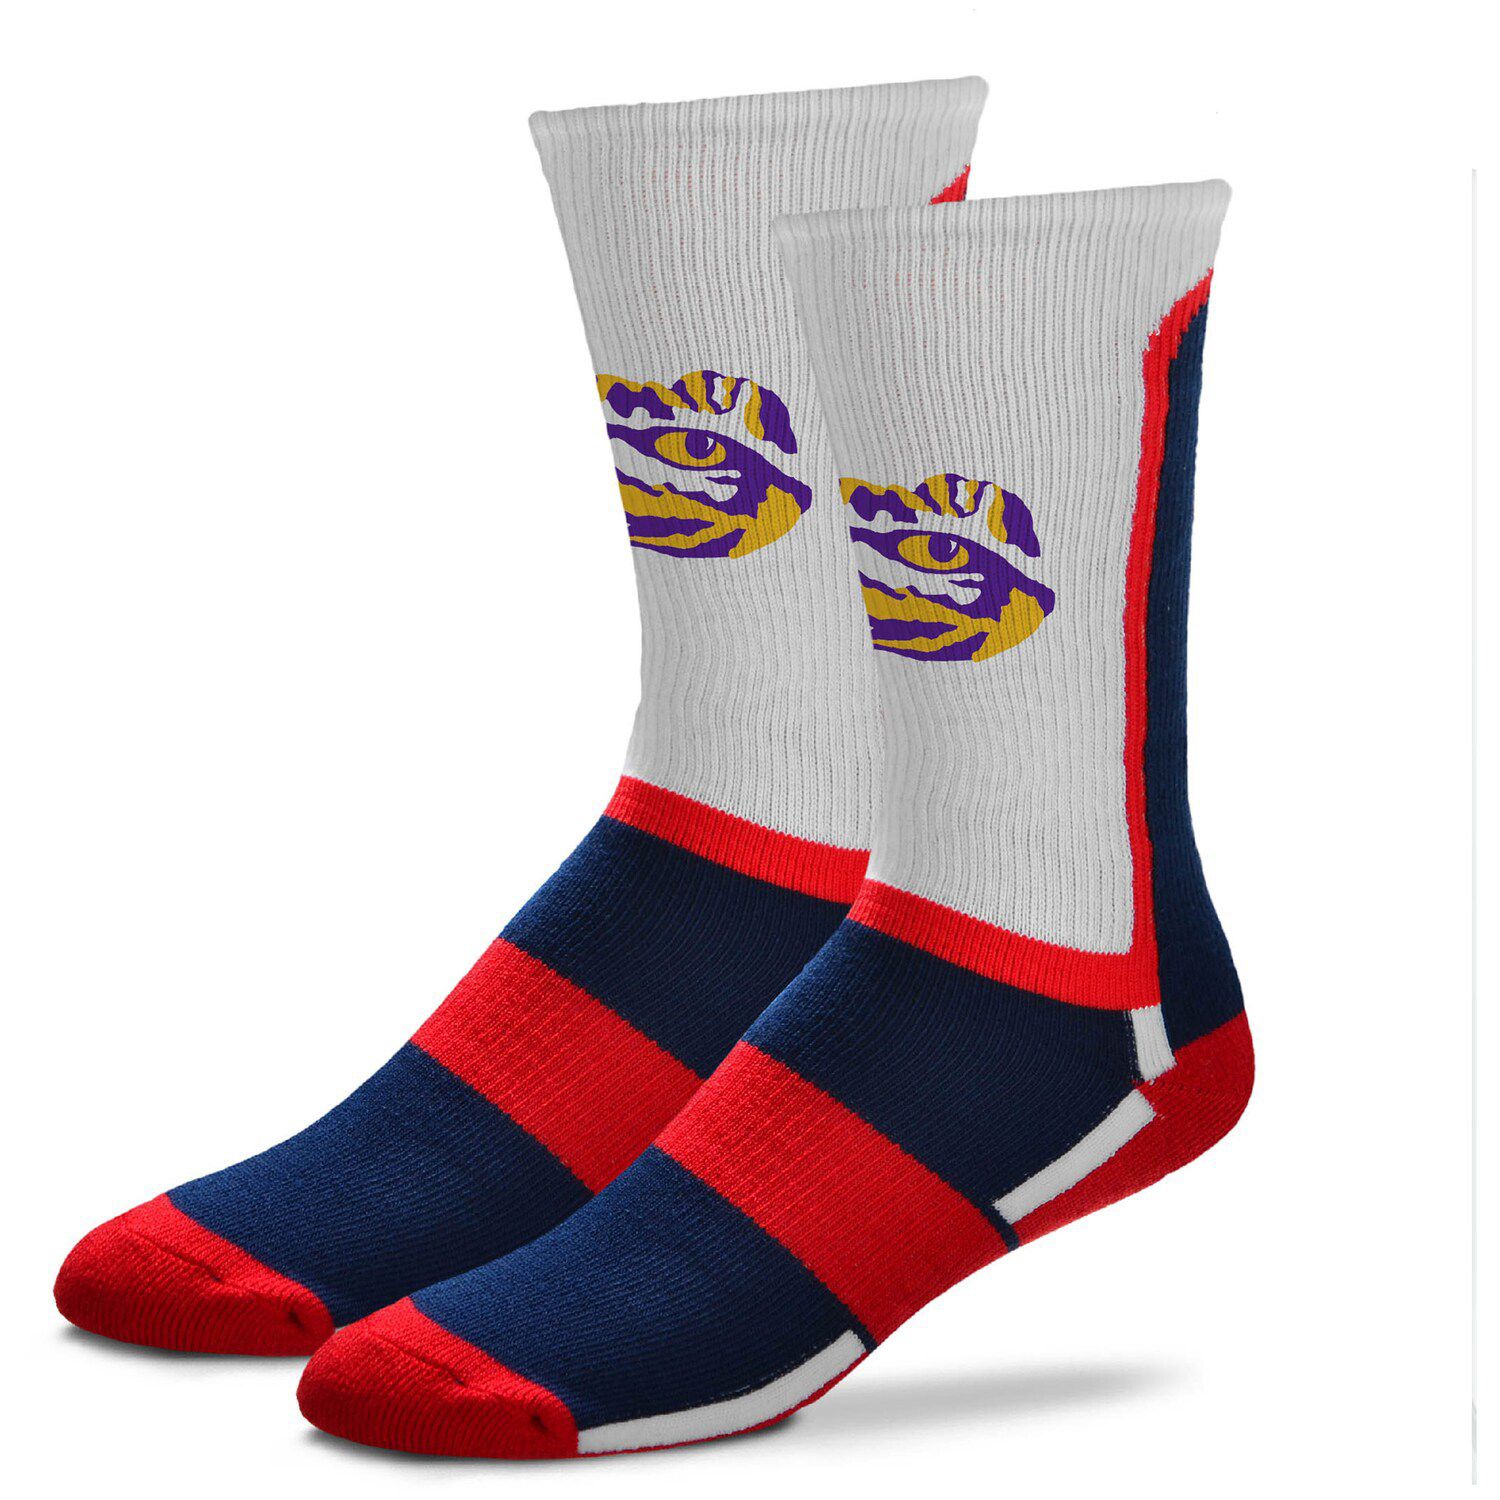 Image for Unbranded Men's For Bare Feet LSU Tigers Patriotic Crew Socks at Kohl's.